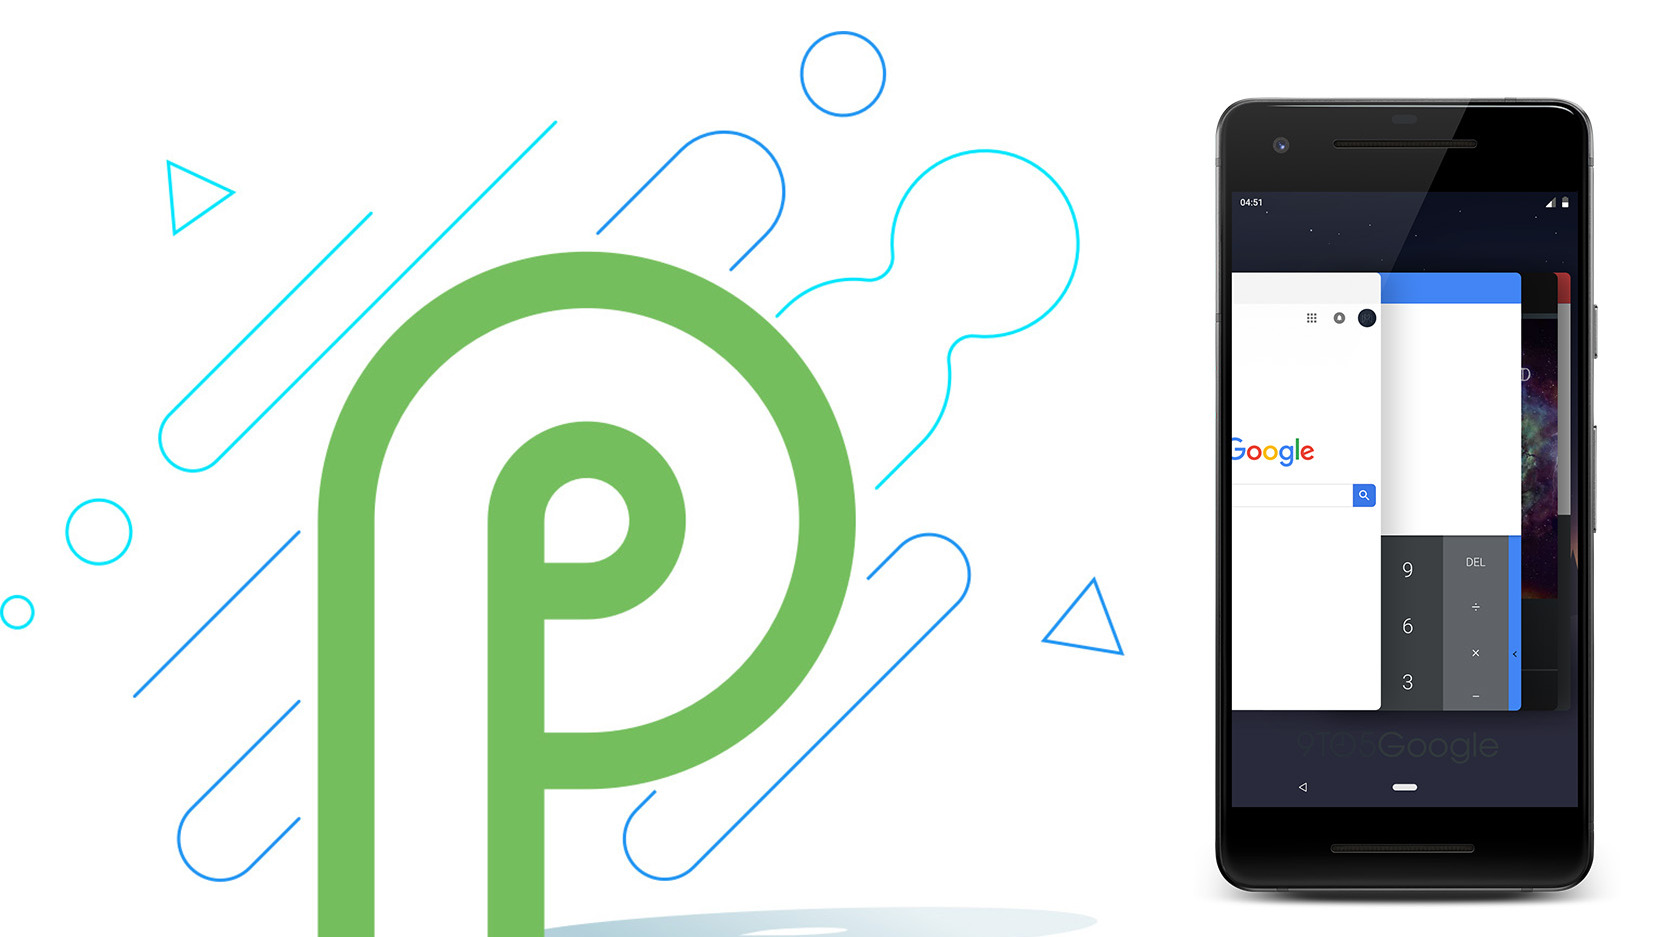 Vychází Android P Developer Preview 3